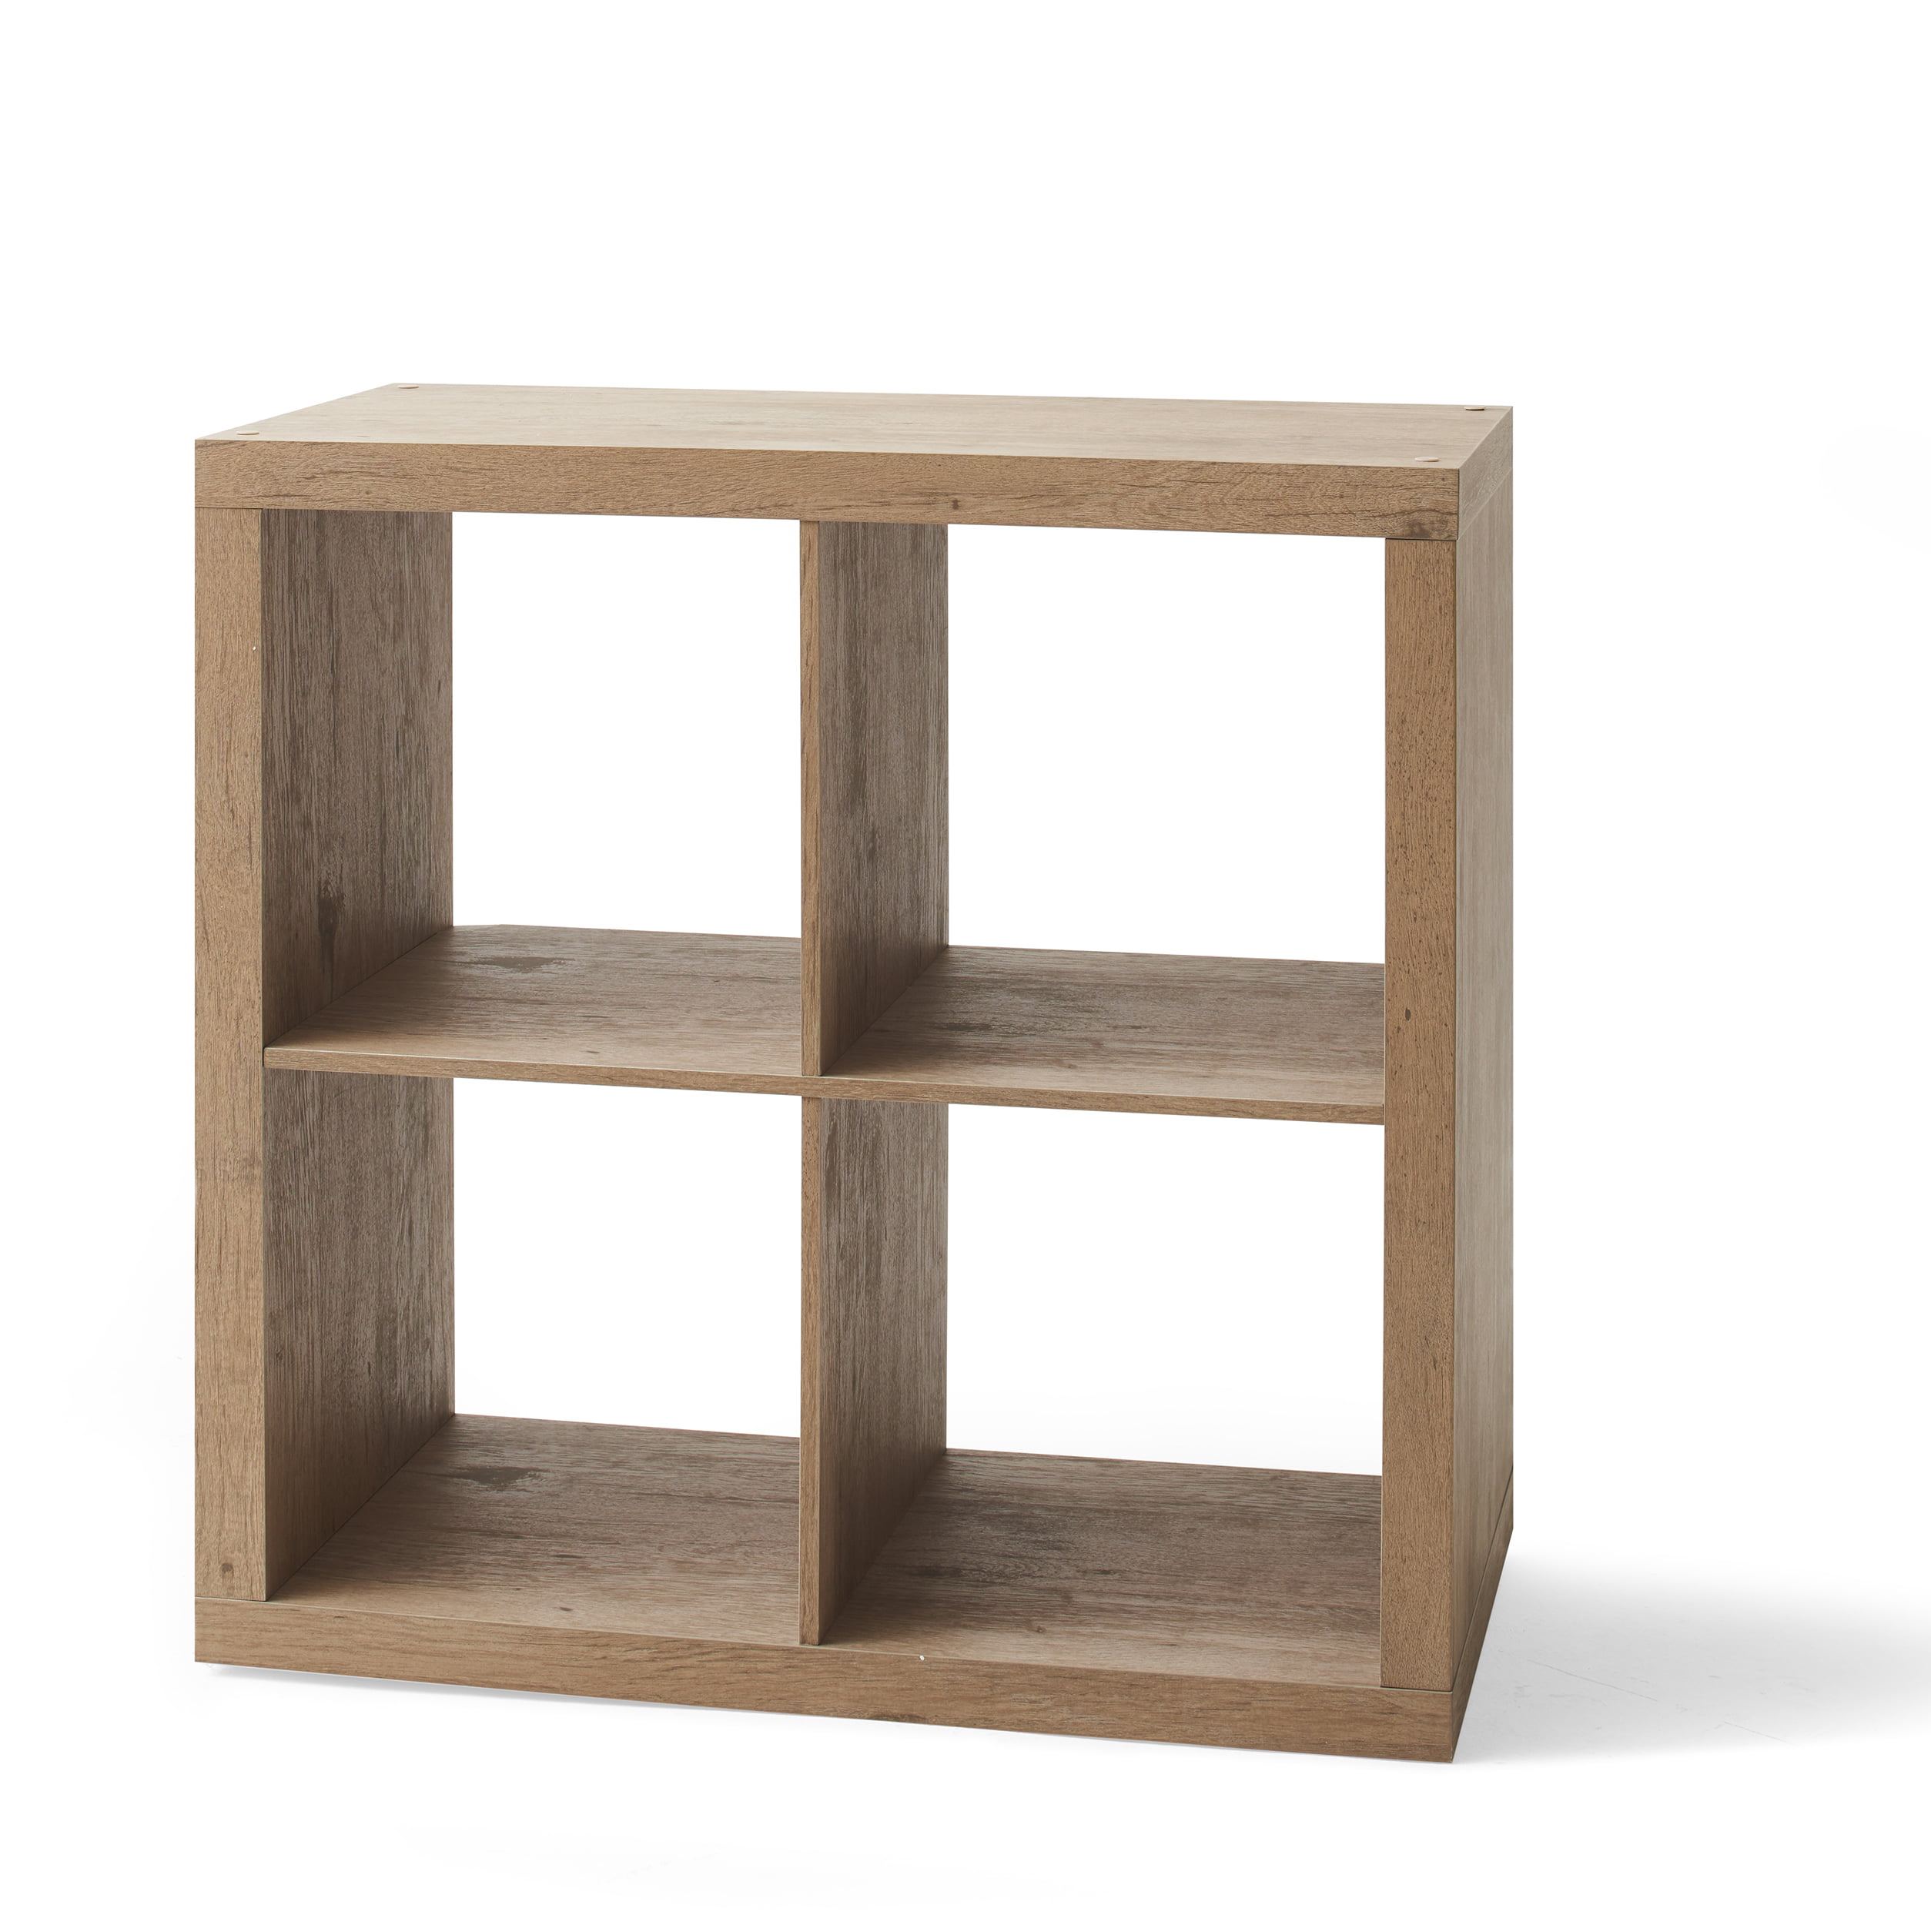 4 Cube Wooden Bookcase Shelving Display Shelves Storage Unit Wood Shelf Door New 